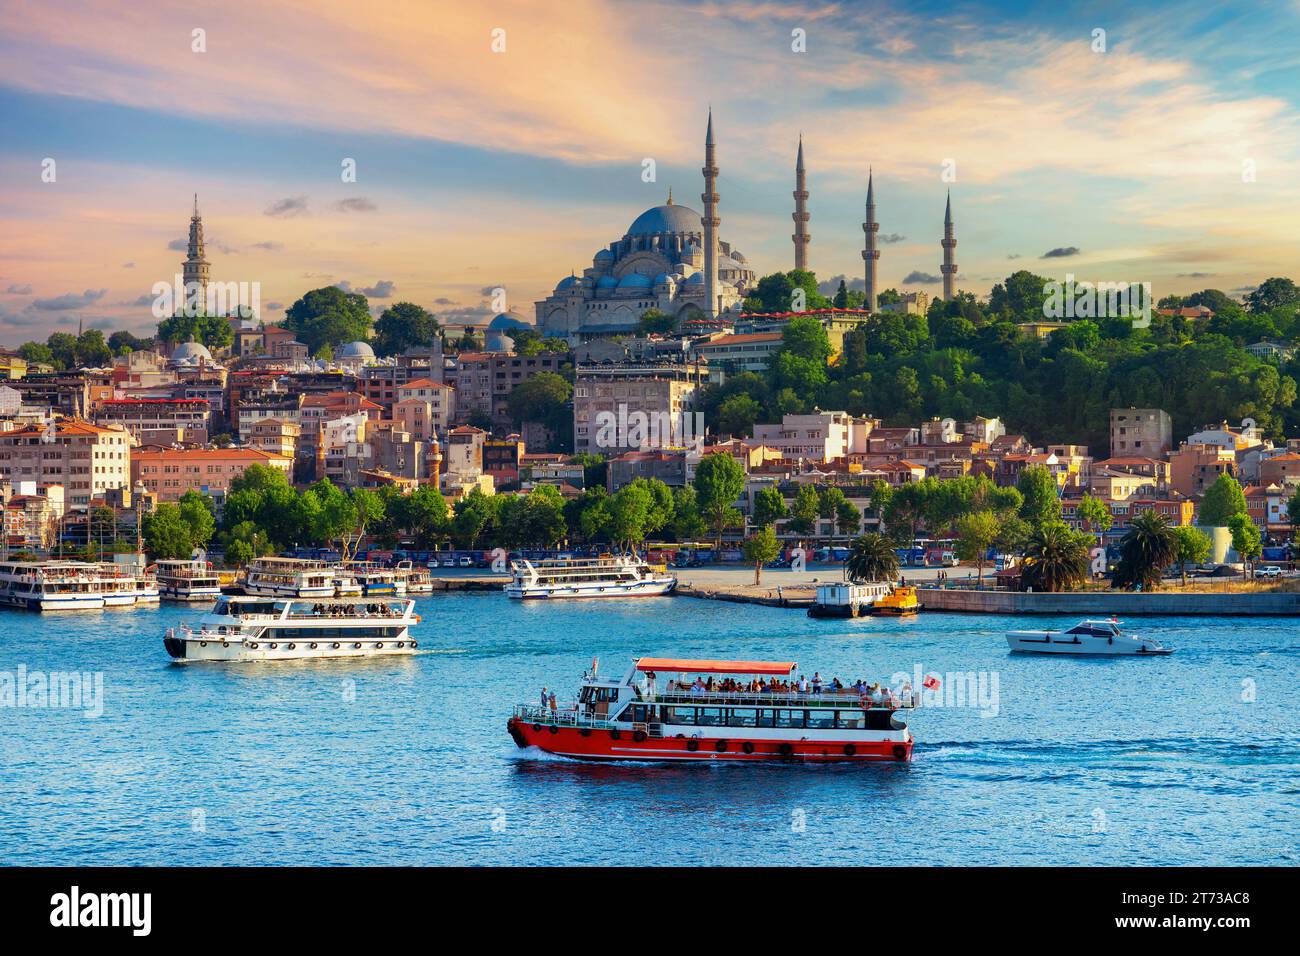 Touristische Sightseeing Schiffe in istanbul Stadt, Türkei. Stockfoto